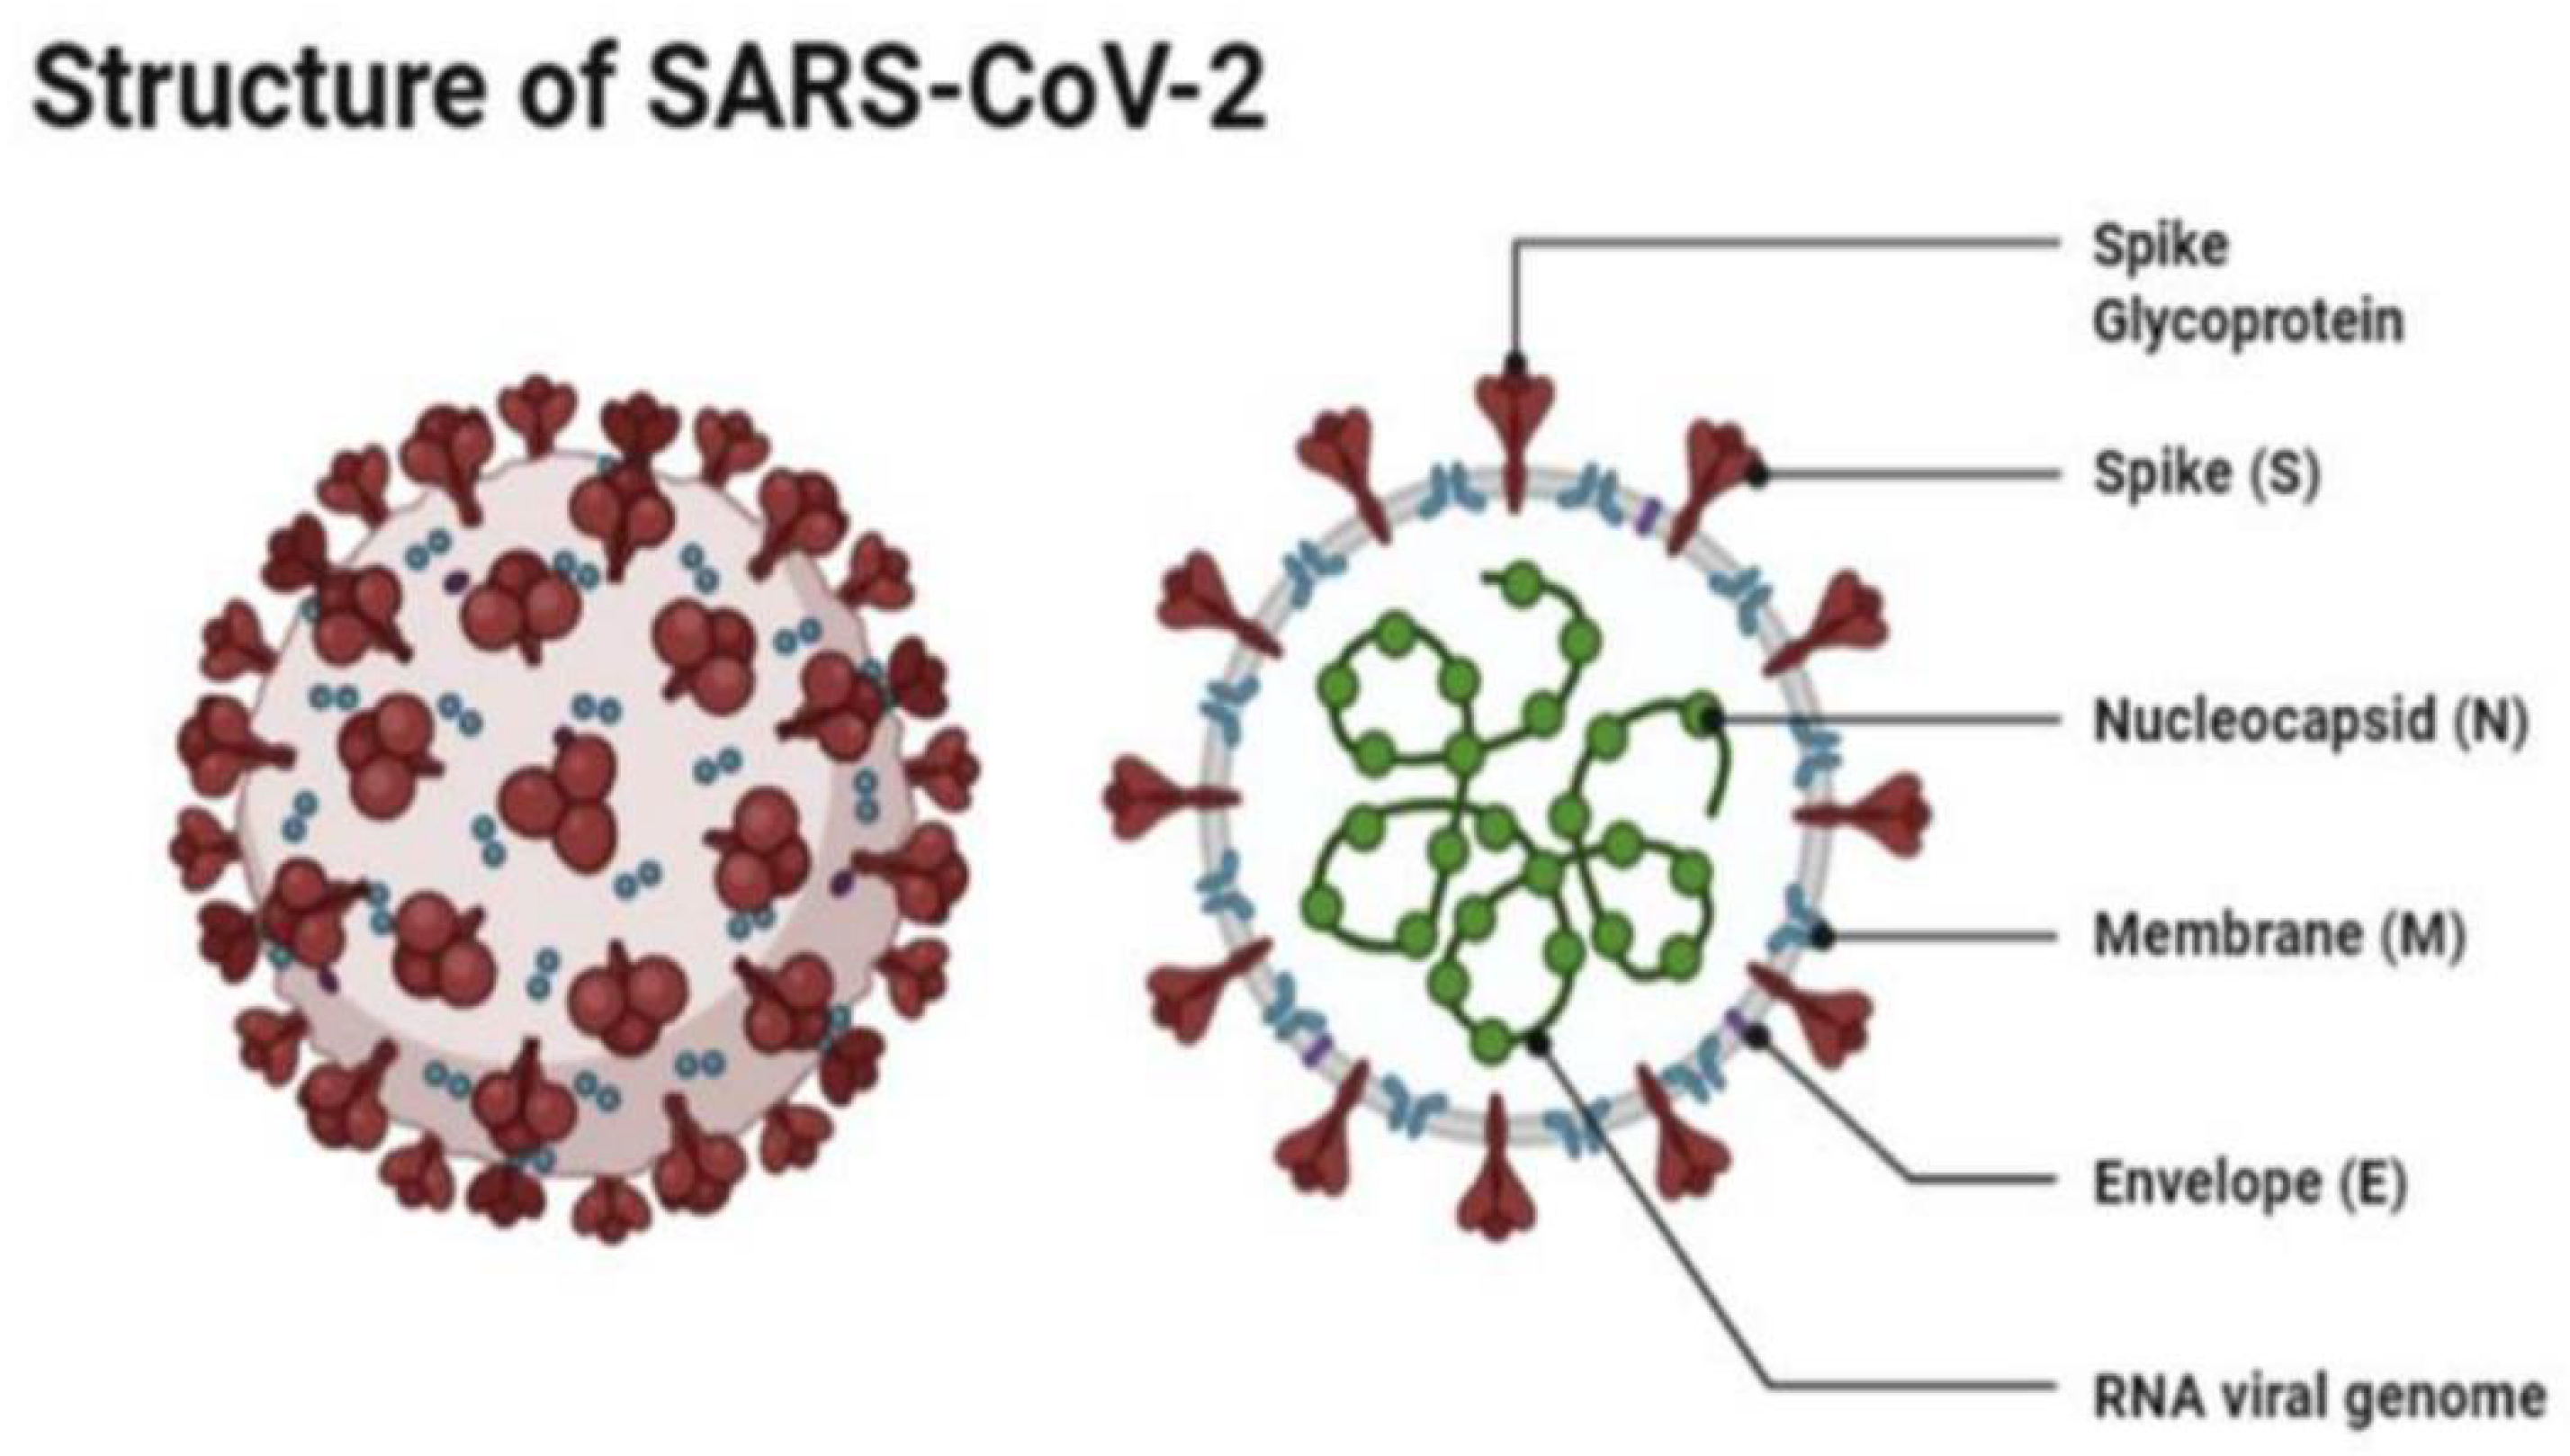 Вирус sars cov 2 отнесен к группе